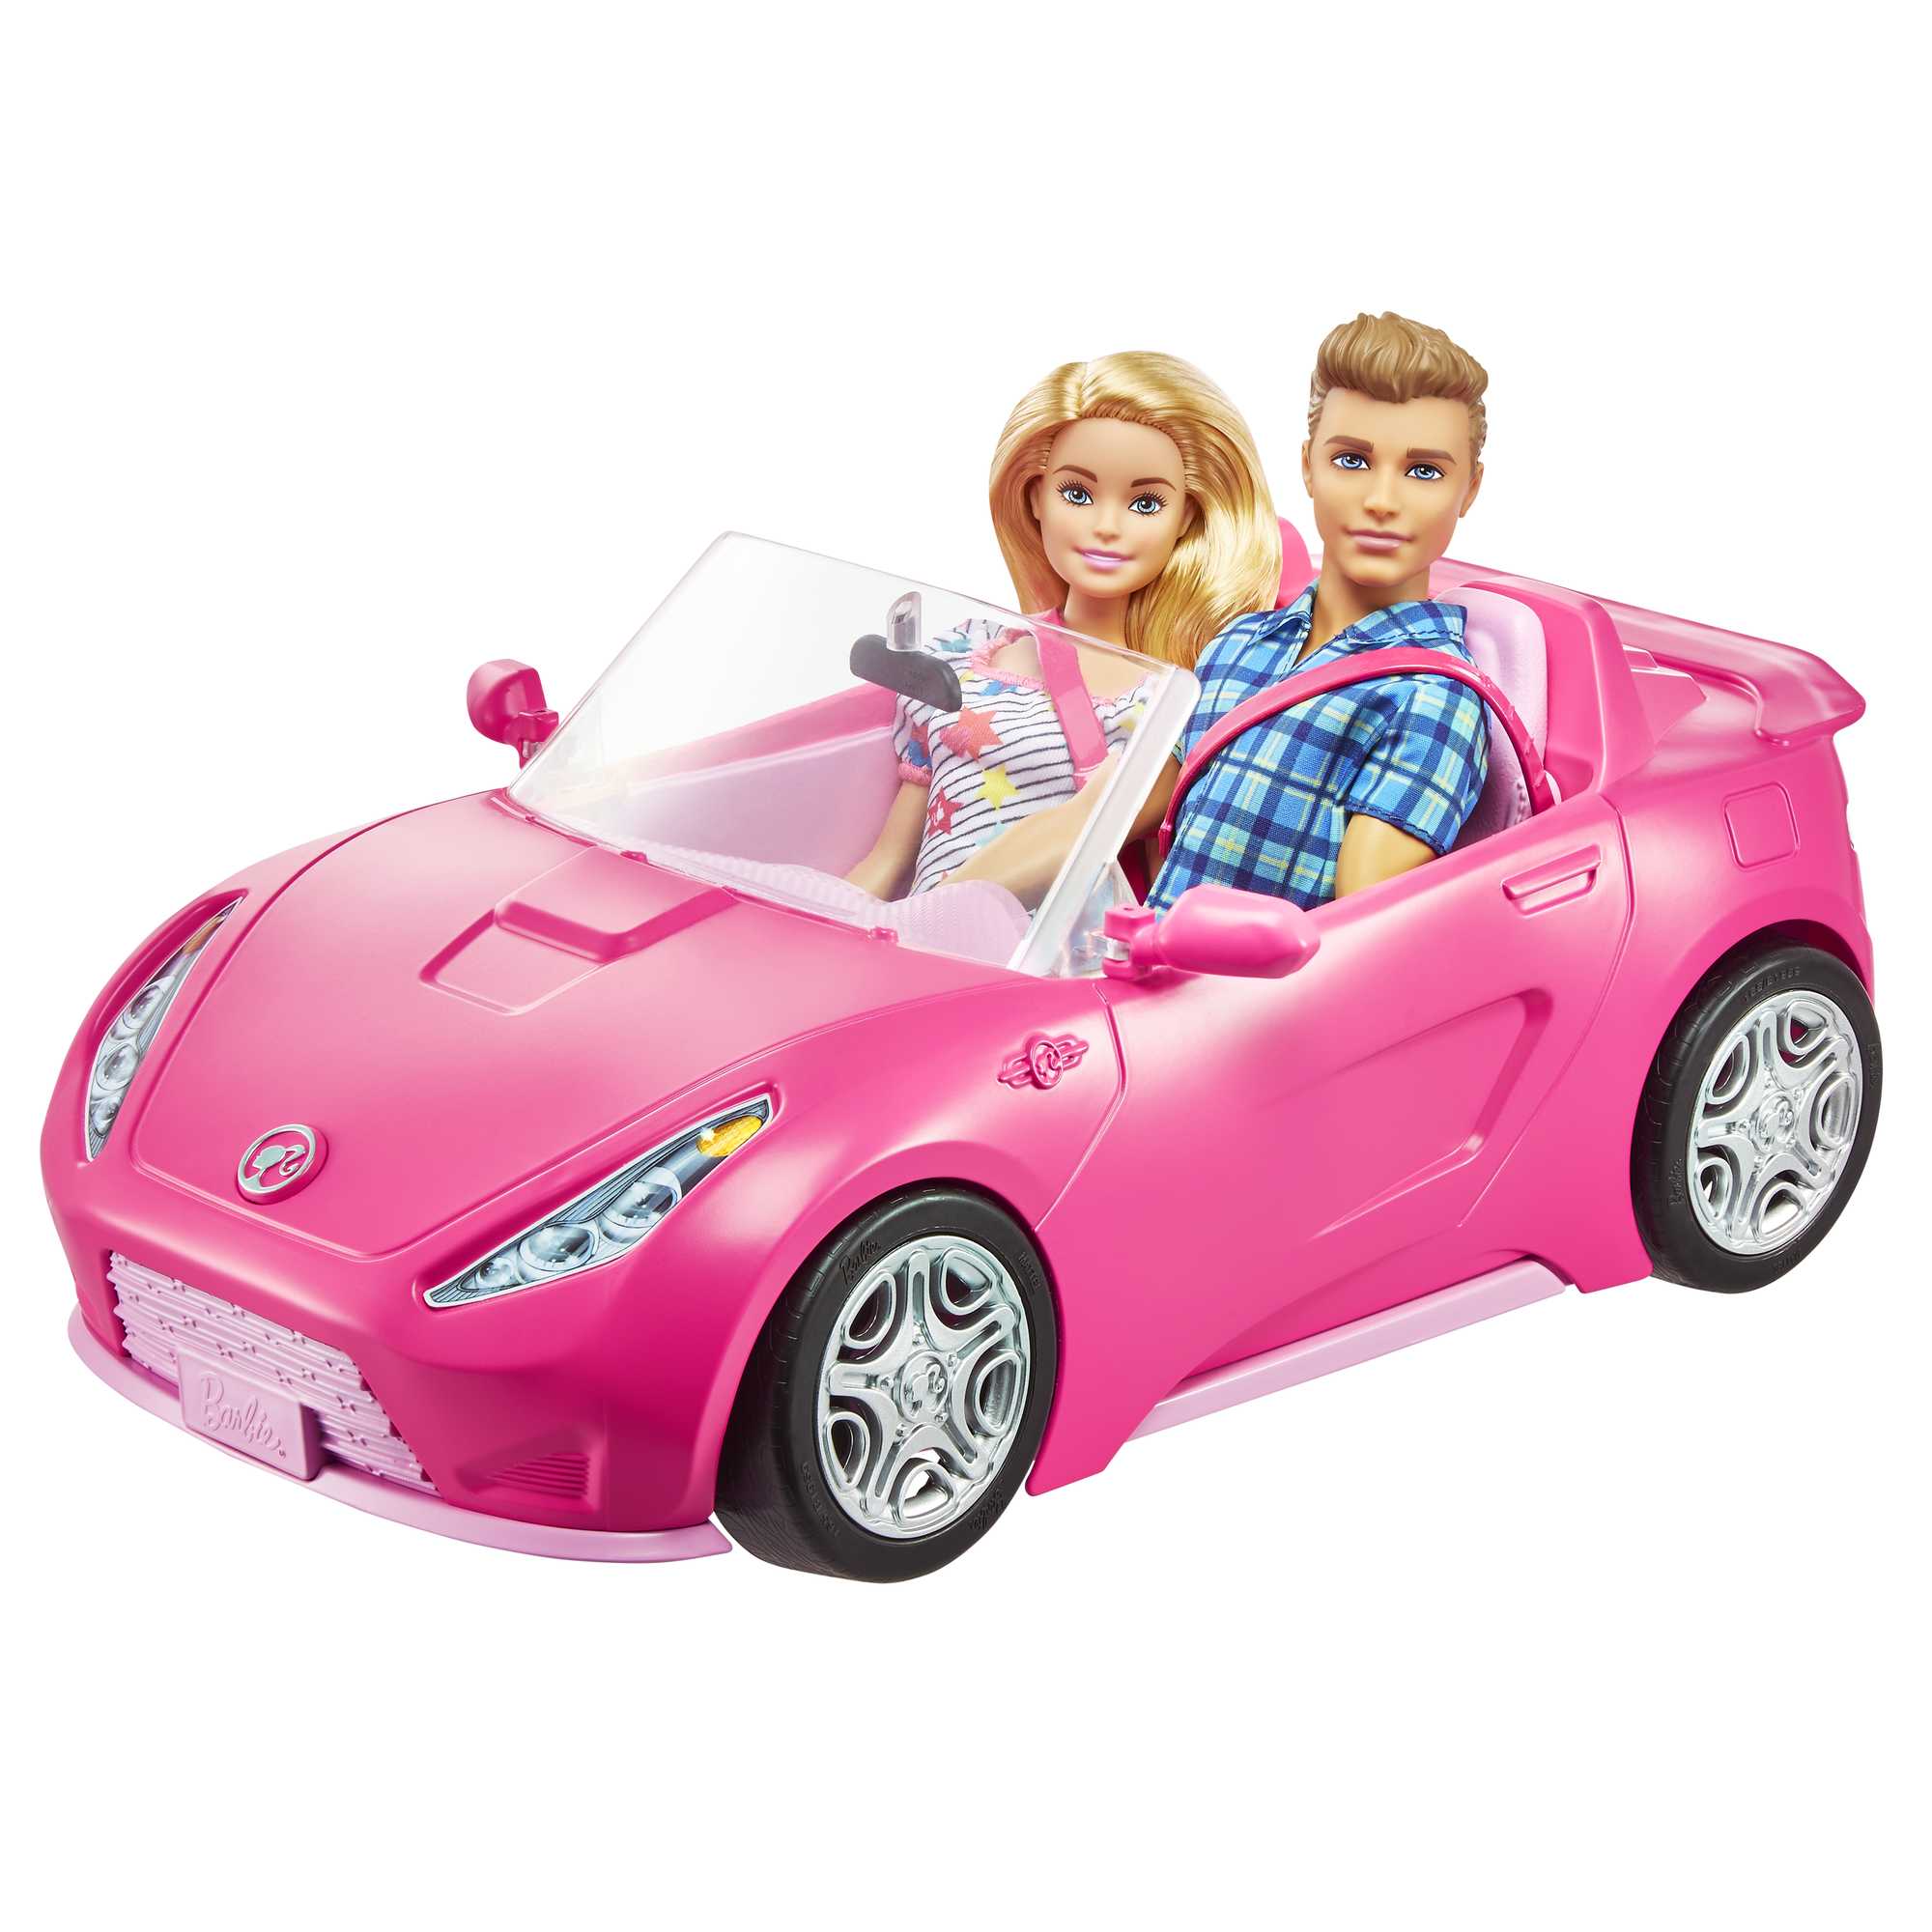 Berri skandale Fascinate Barbie Doll, Vehicle and Accessories | GVK05 | MATTEL